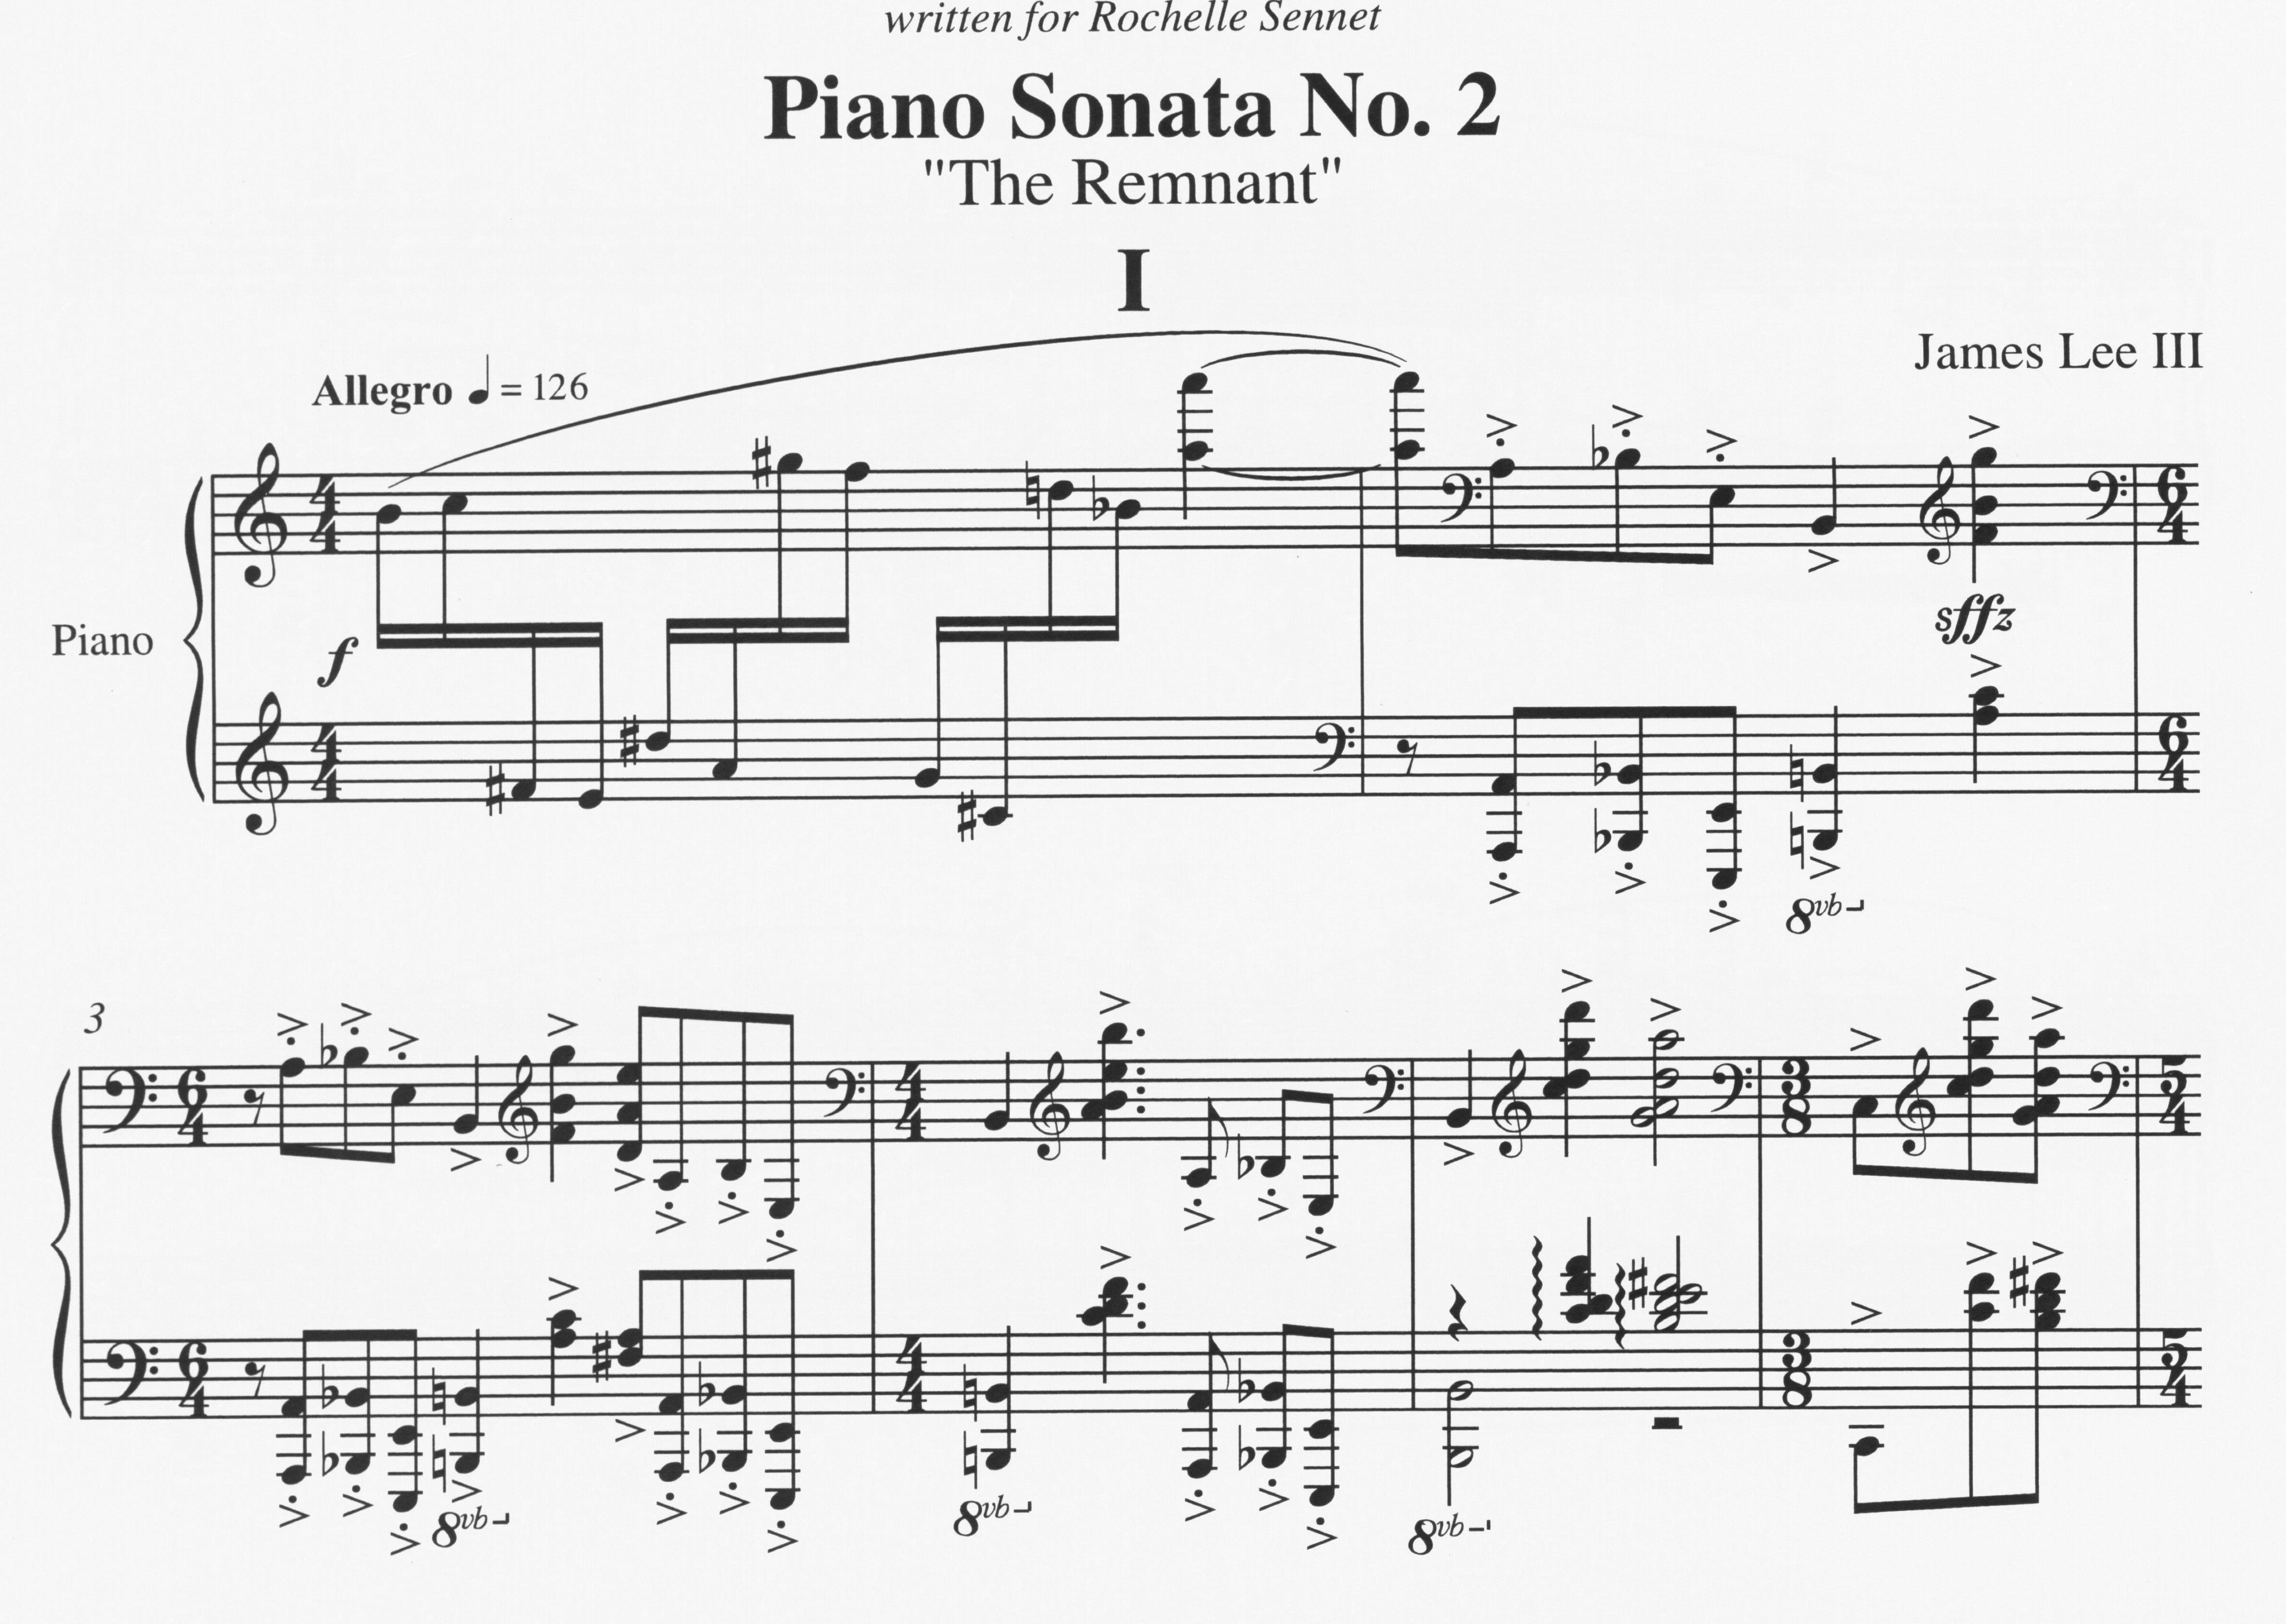 Piano Sonata No. 2: The Remnant - James Lee III